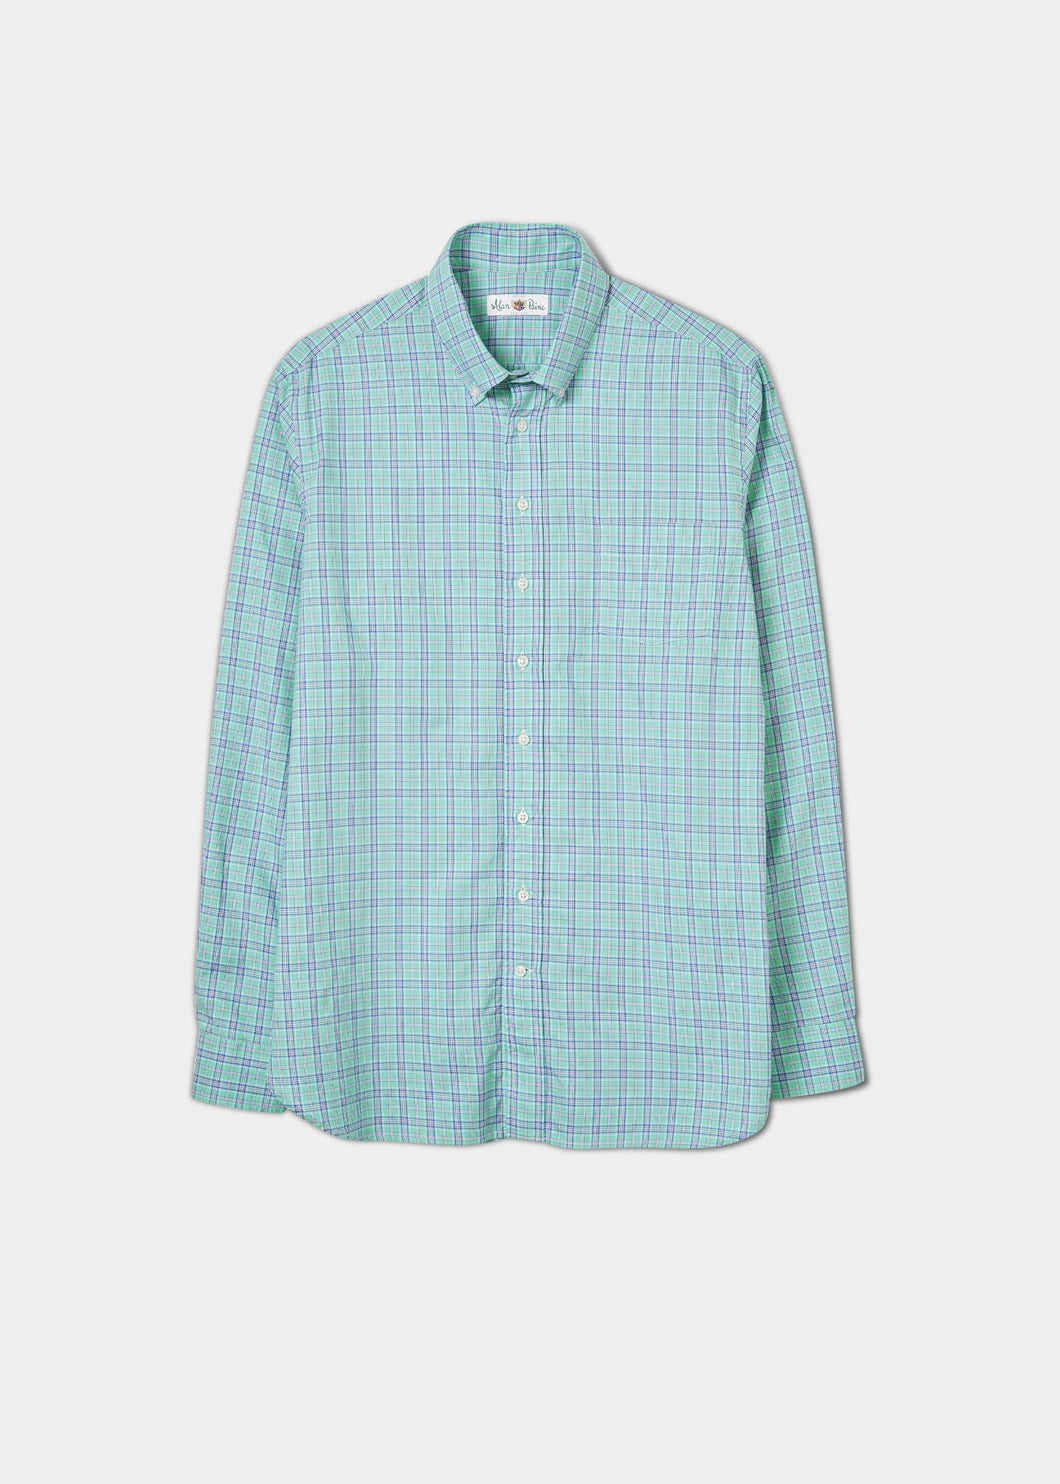 Alan Paine - Fleetwood Classic Fit Shirt - Turquoise Plaid